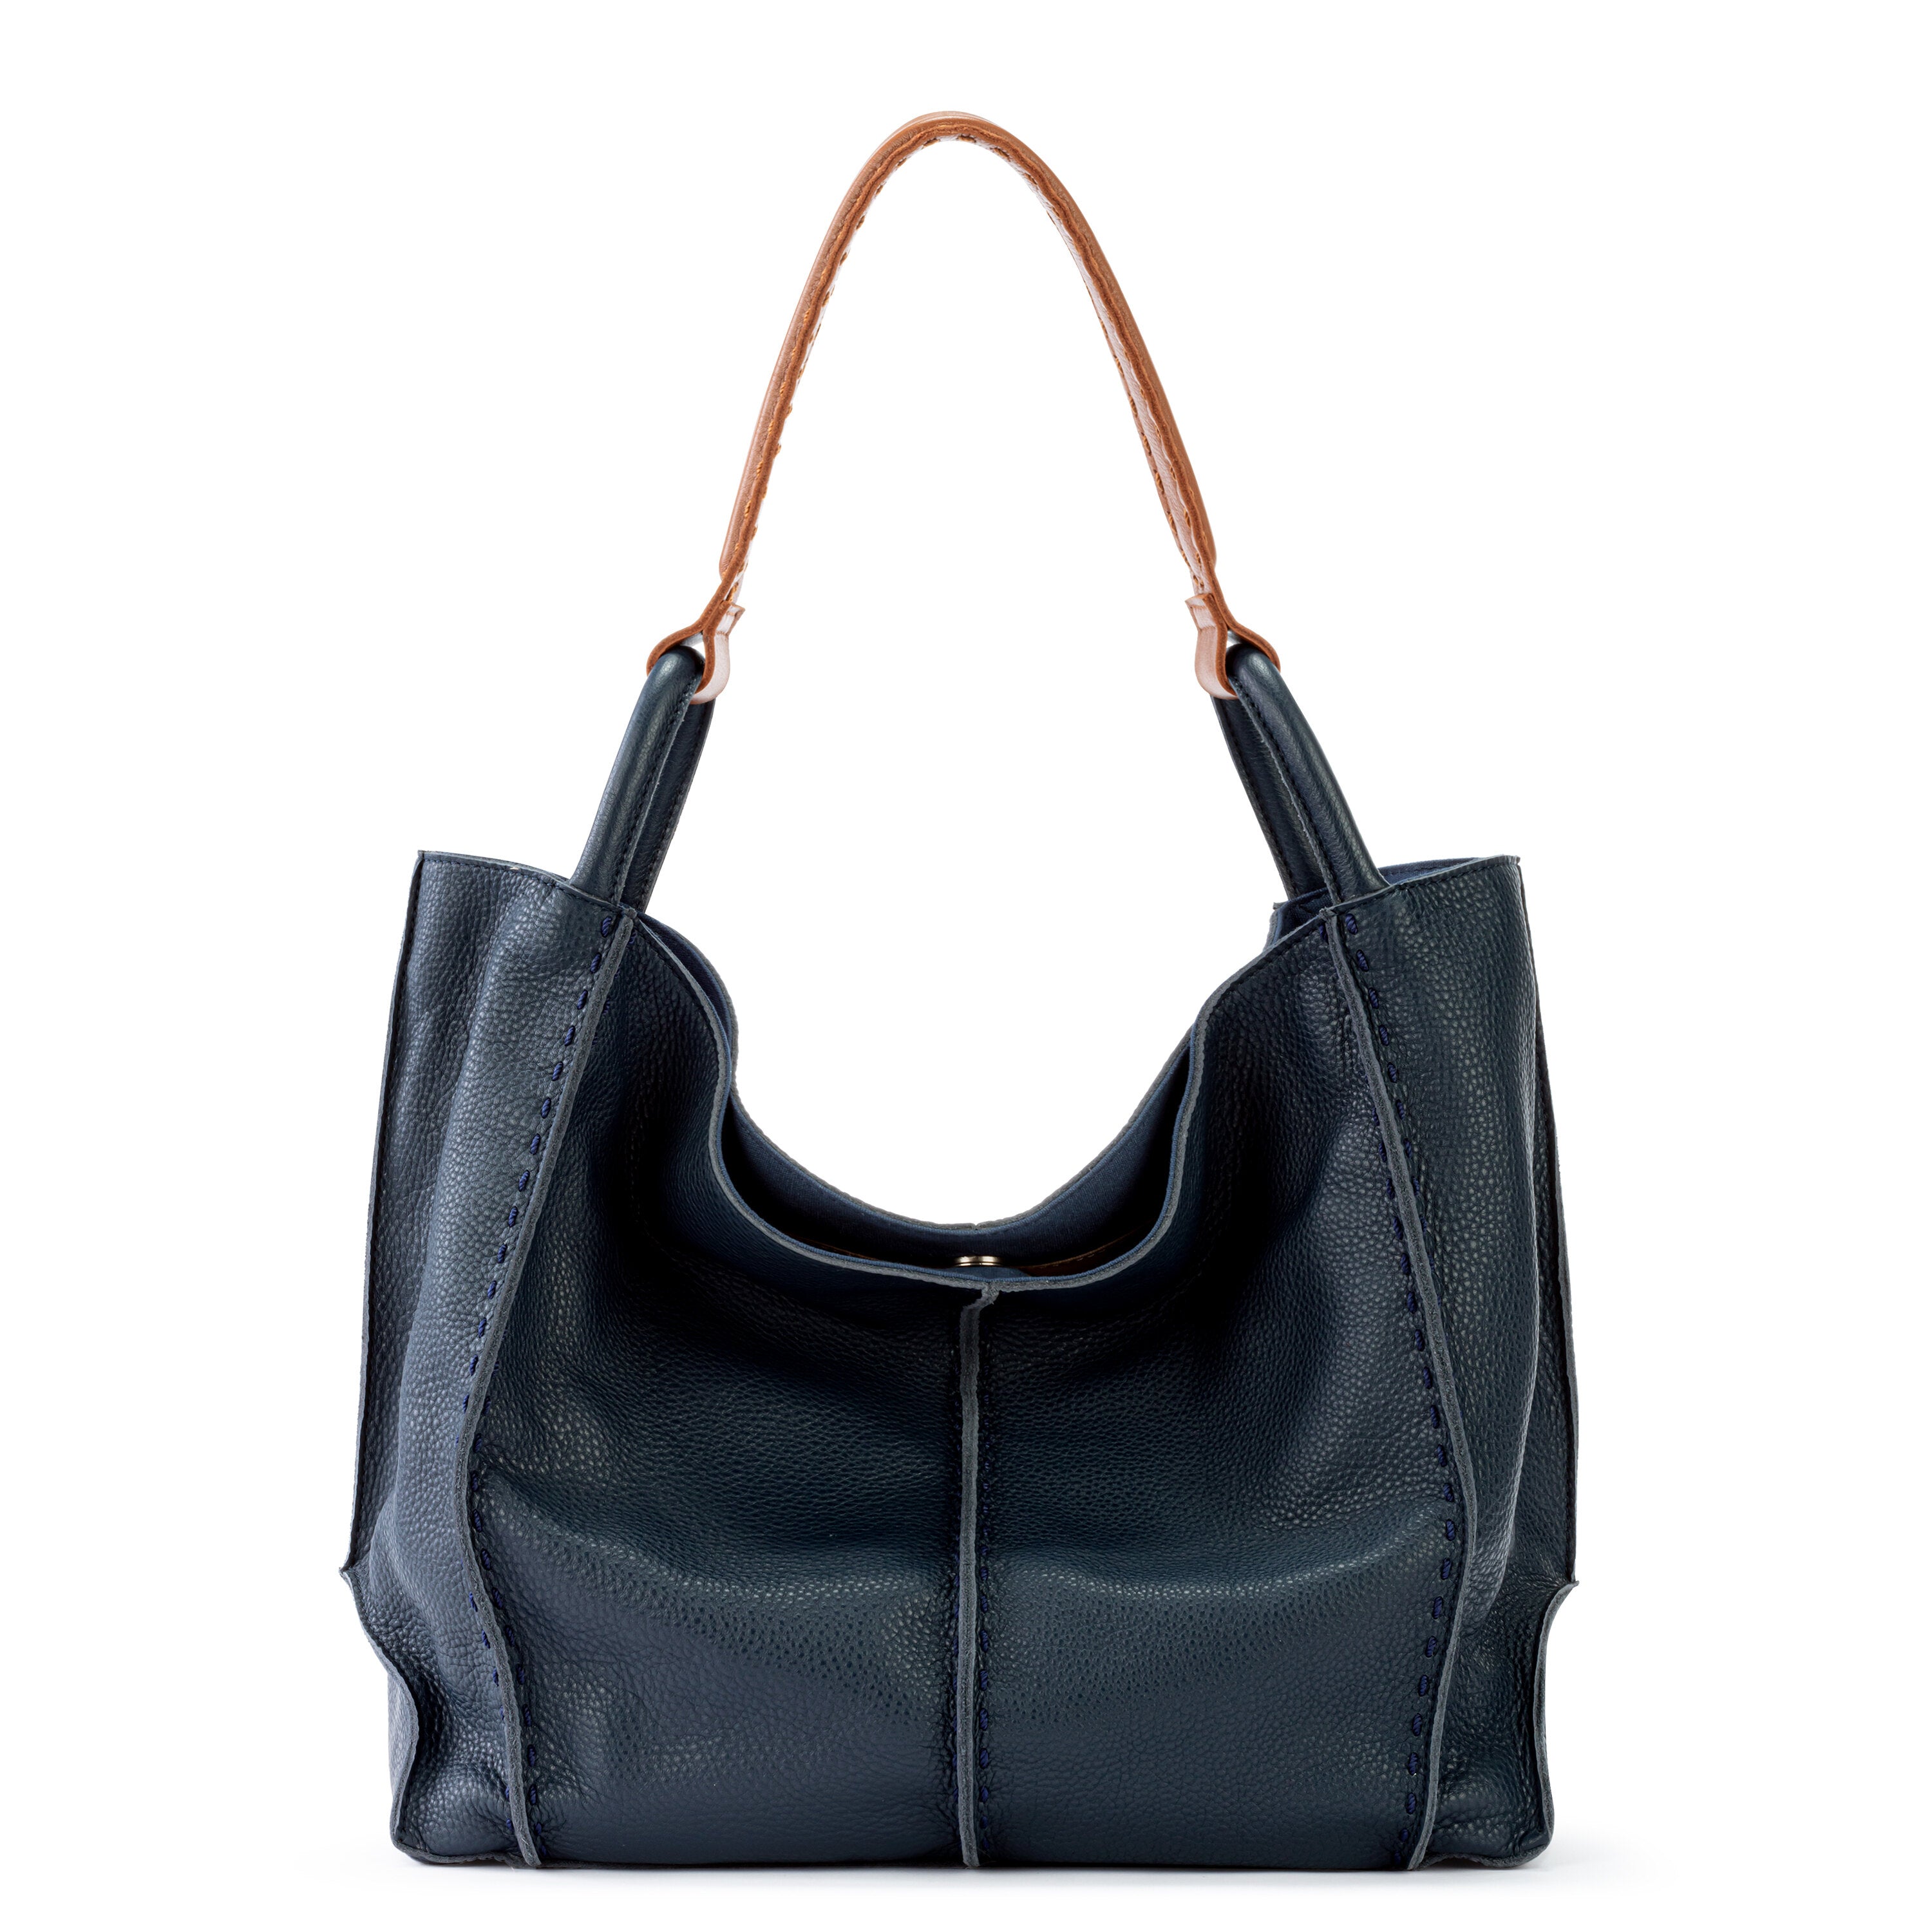 Los Feliz | Chic and Trendy Collection Of Handbags and Footwear